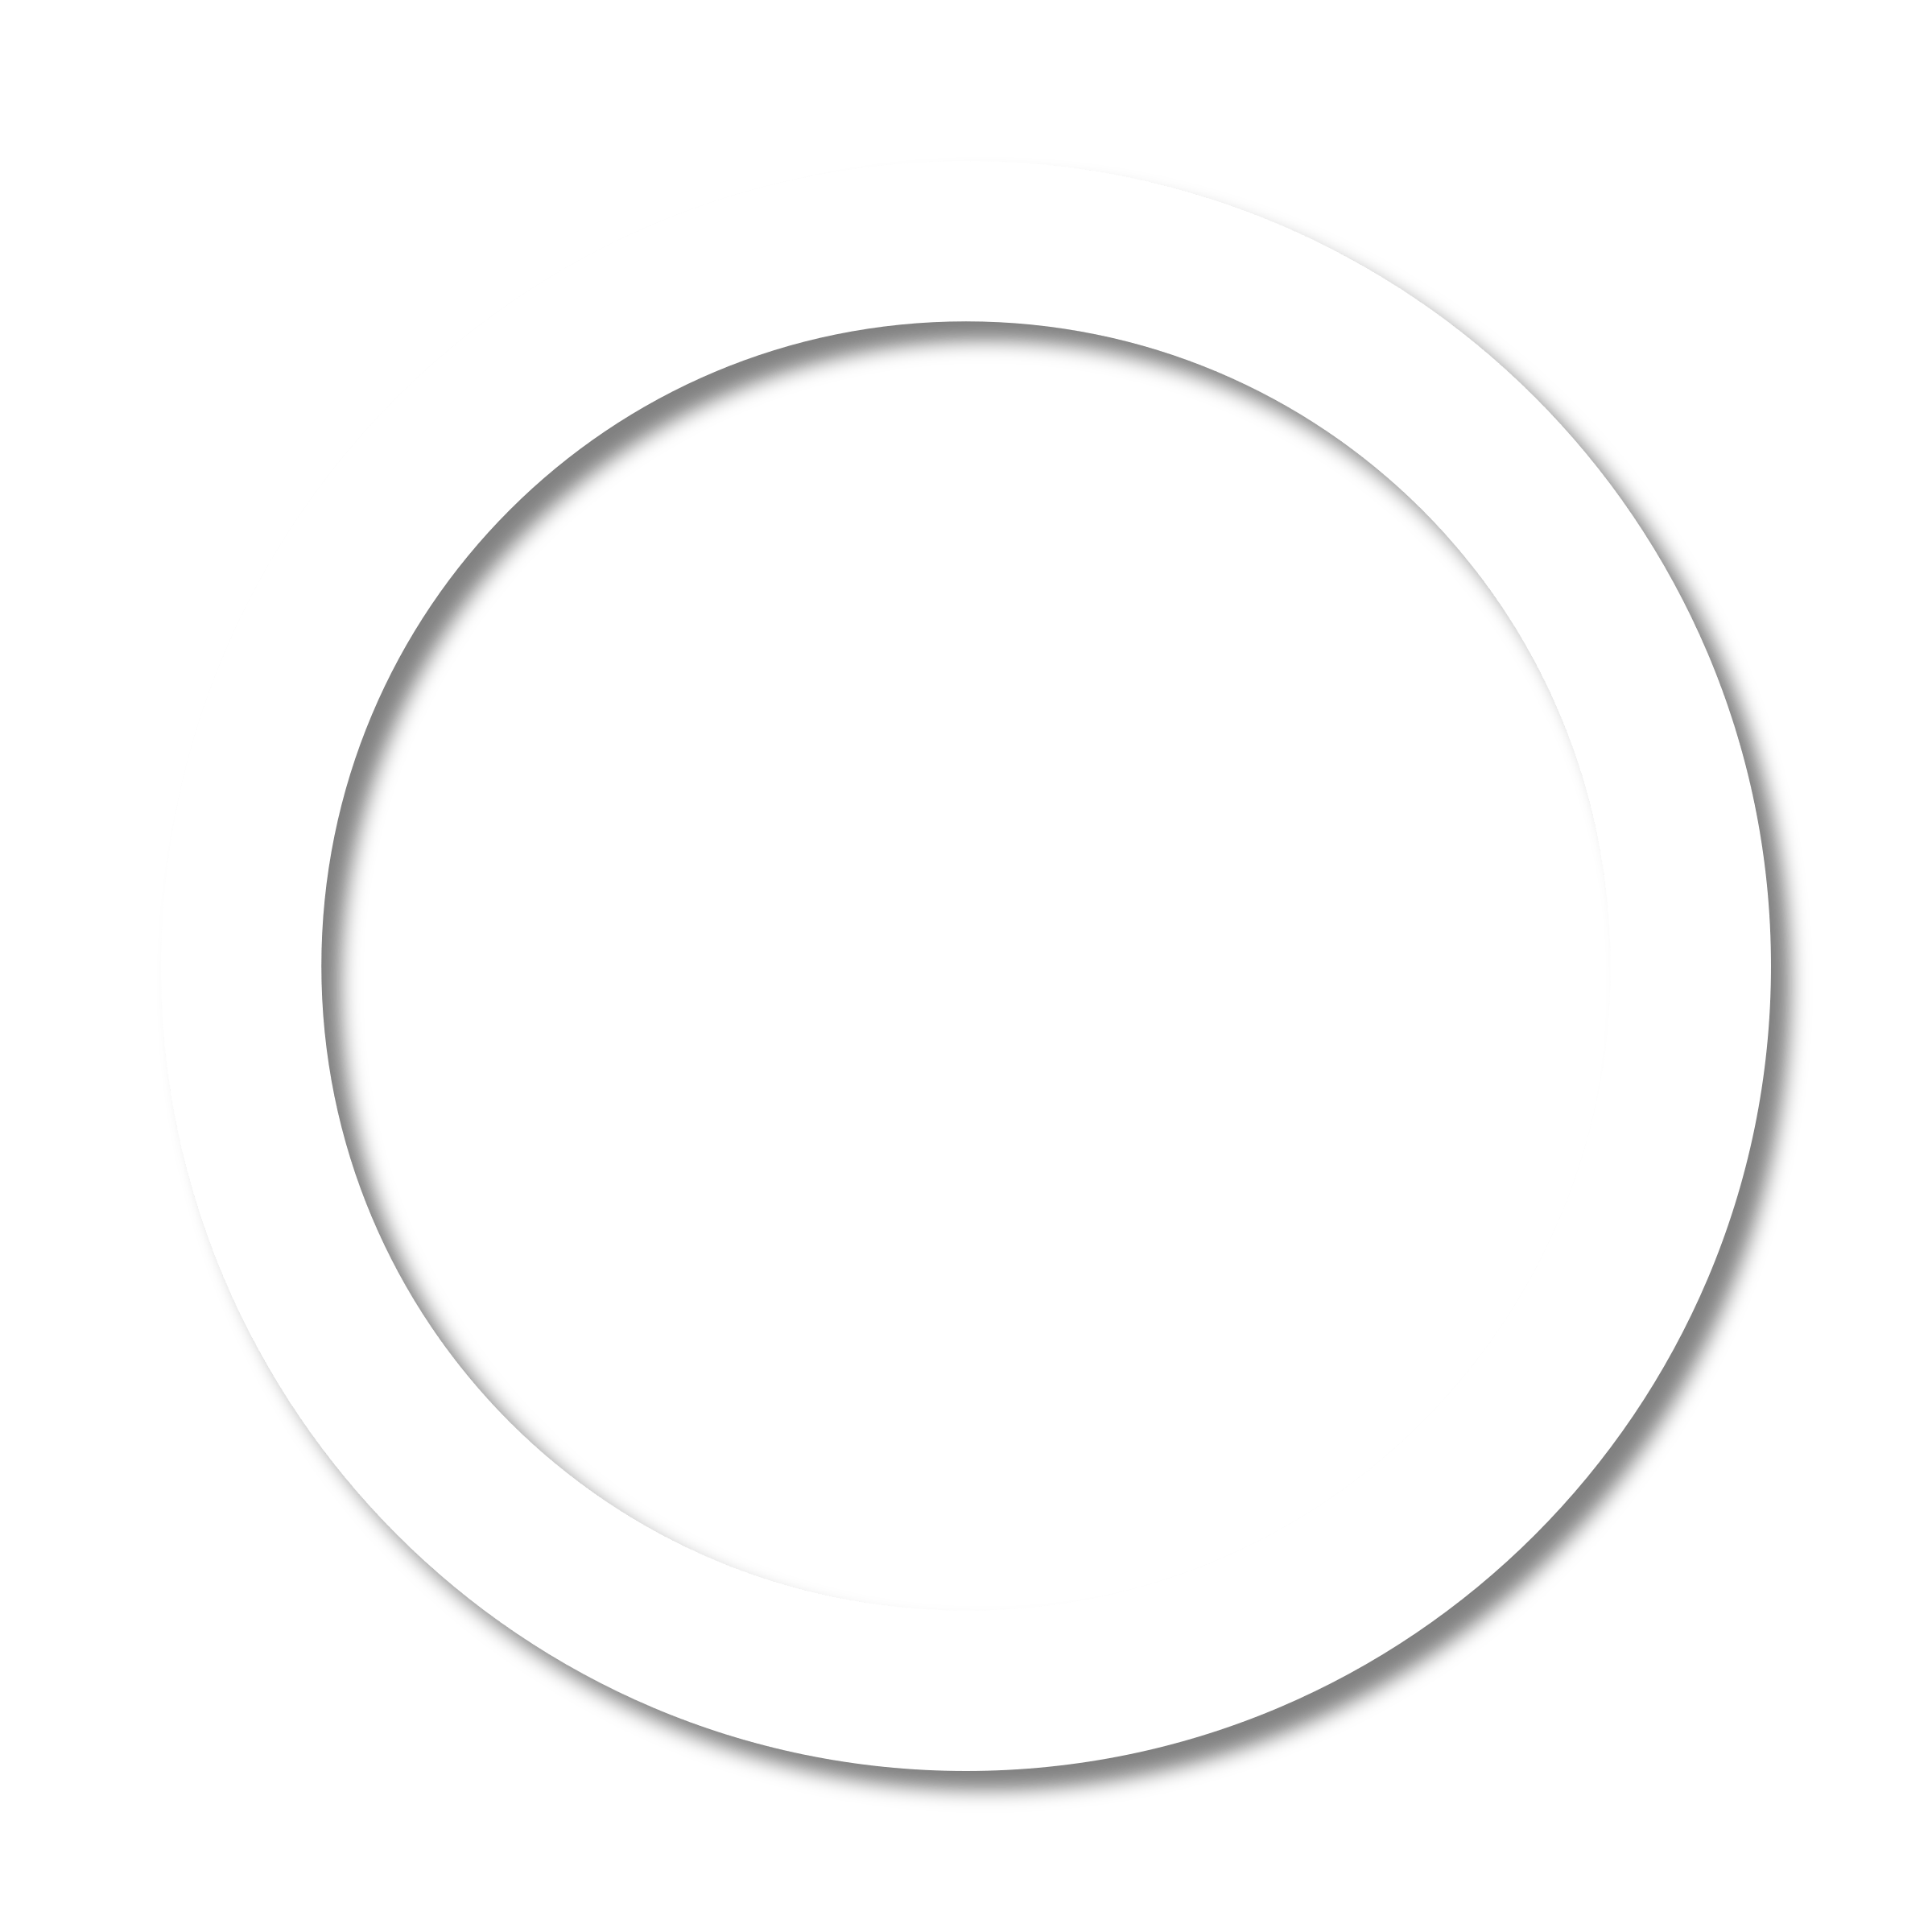 Black White Circle in Circle Logo - white circle Icon PNG PNG and Icon Downloads